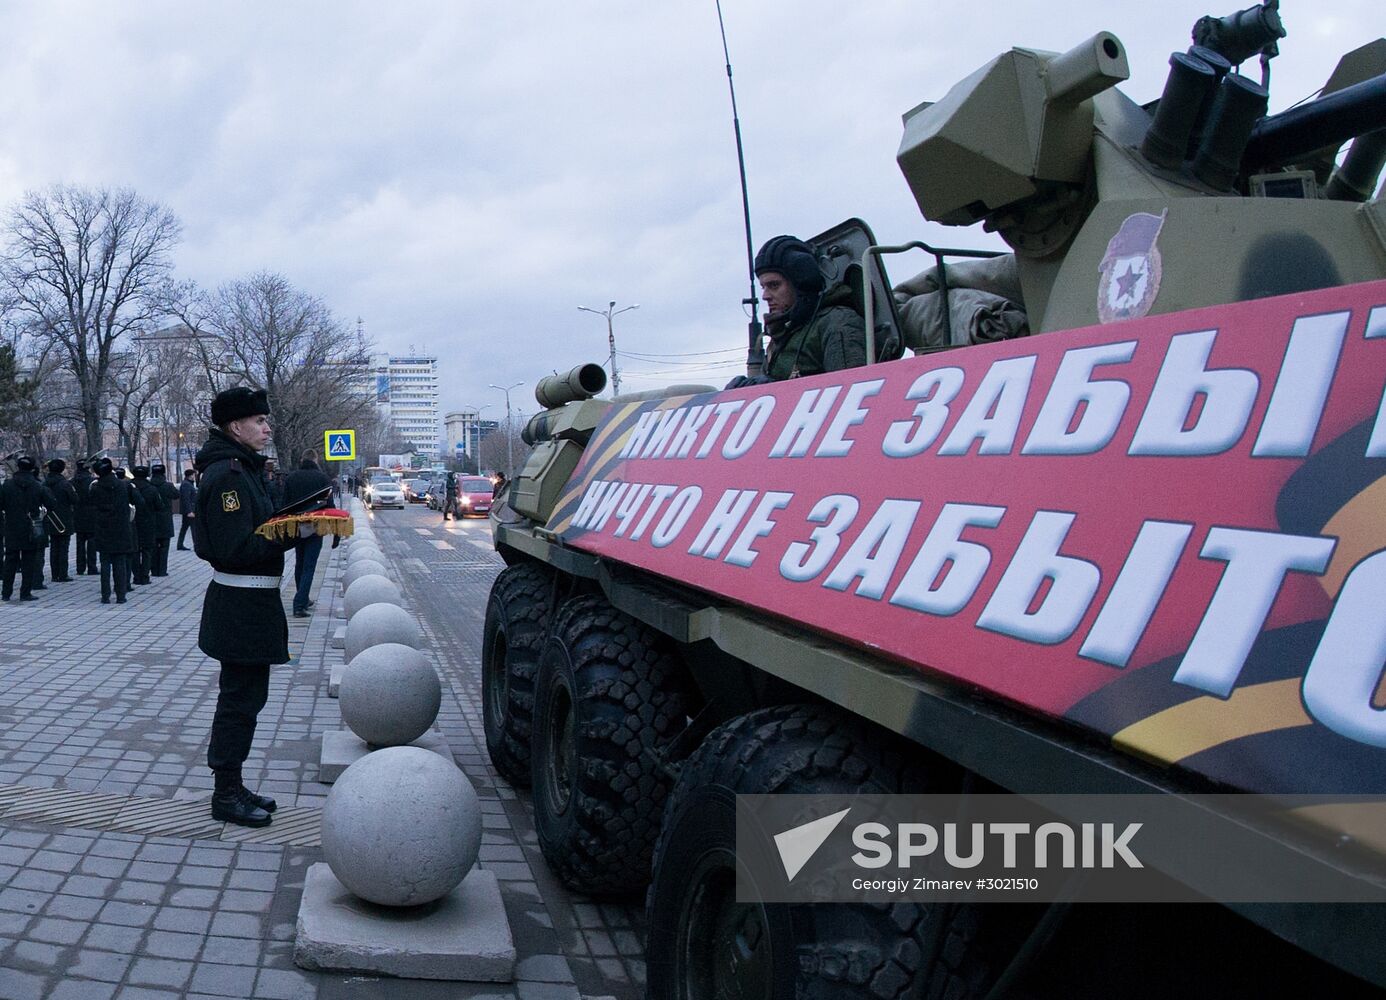 Beskozyrka military and patriotic campaign